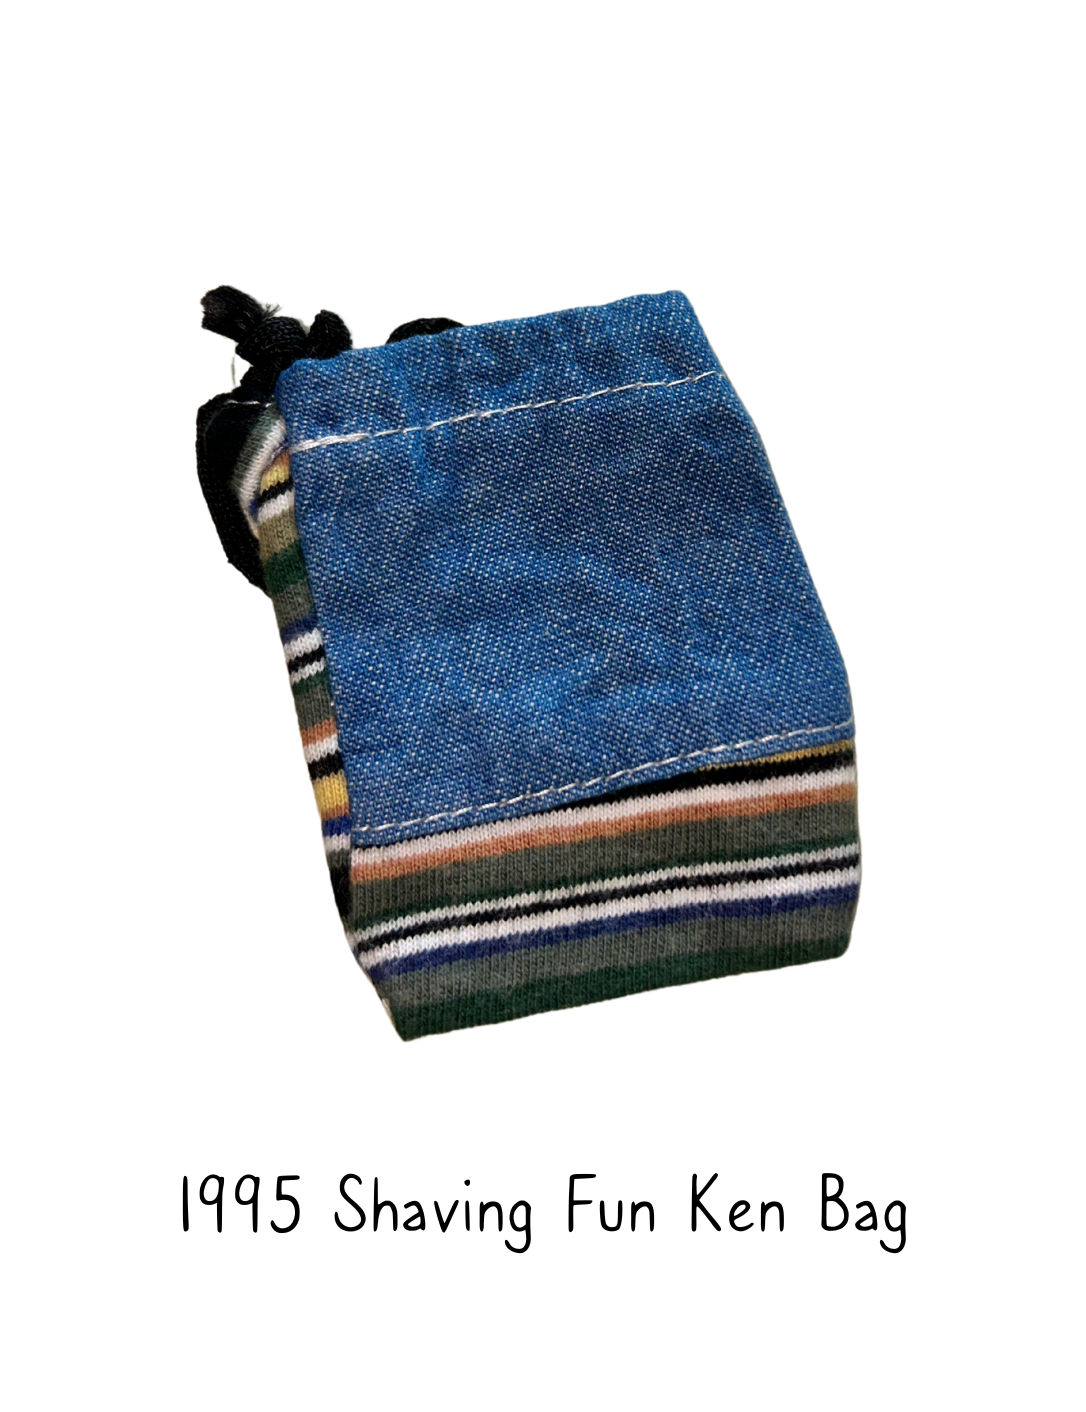 1995 Shaving Fun Ken Doll Bag